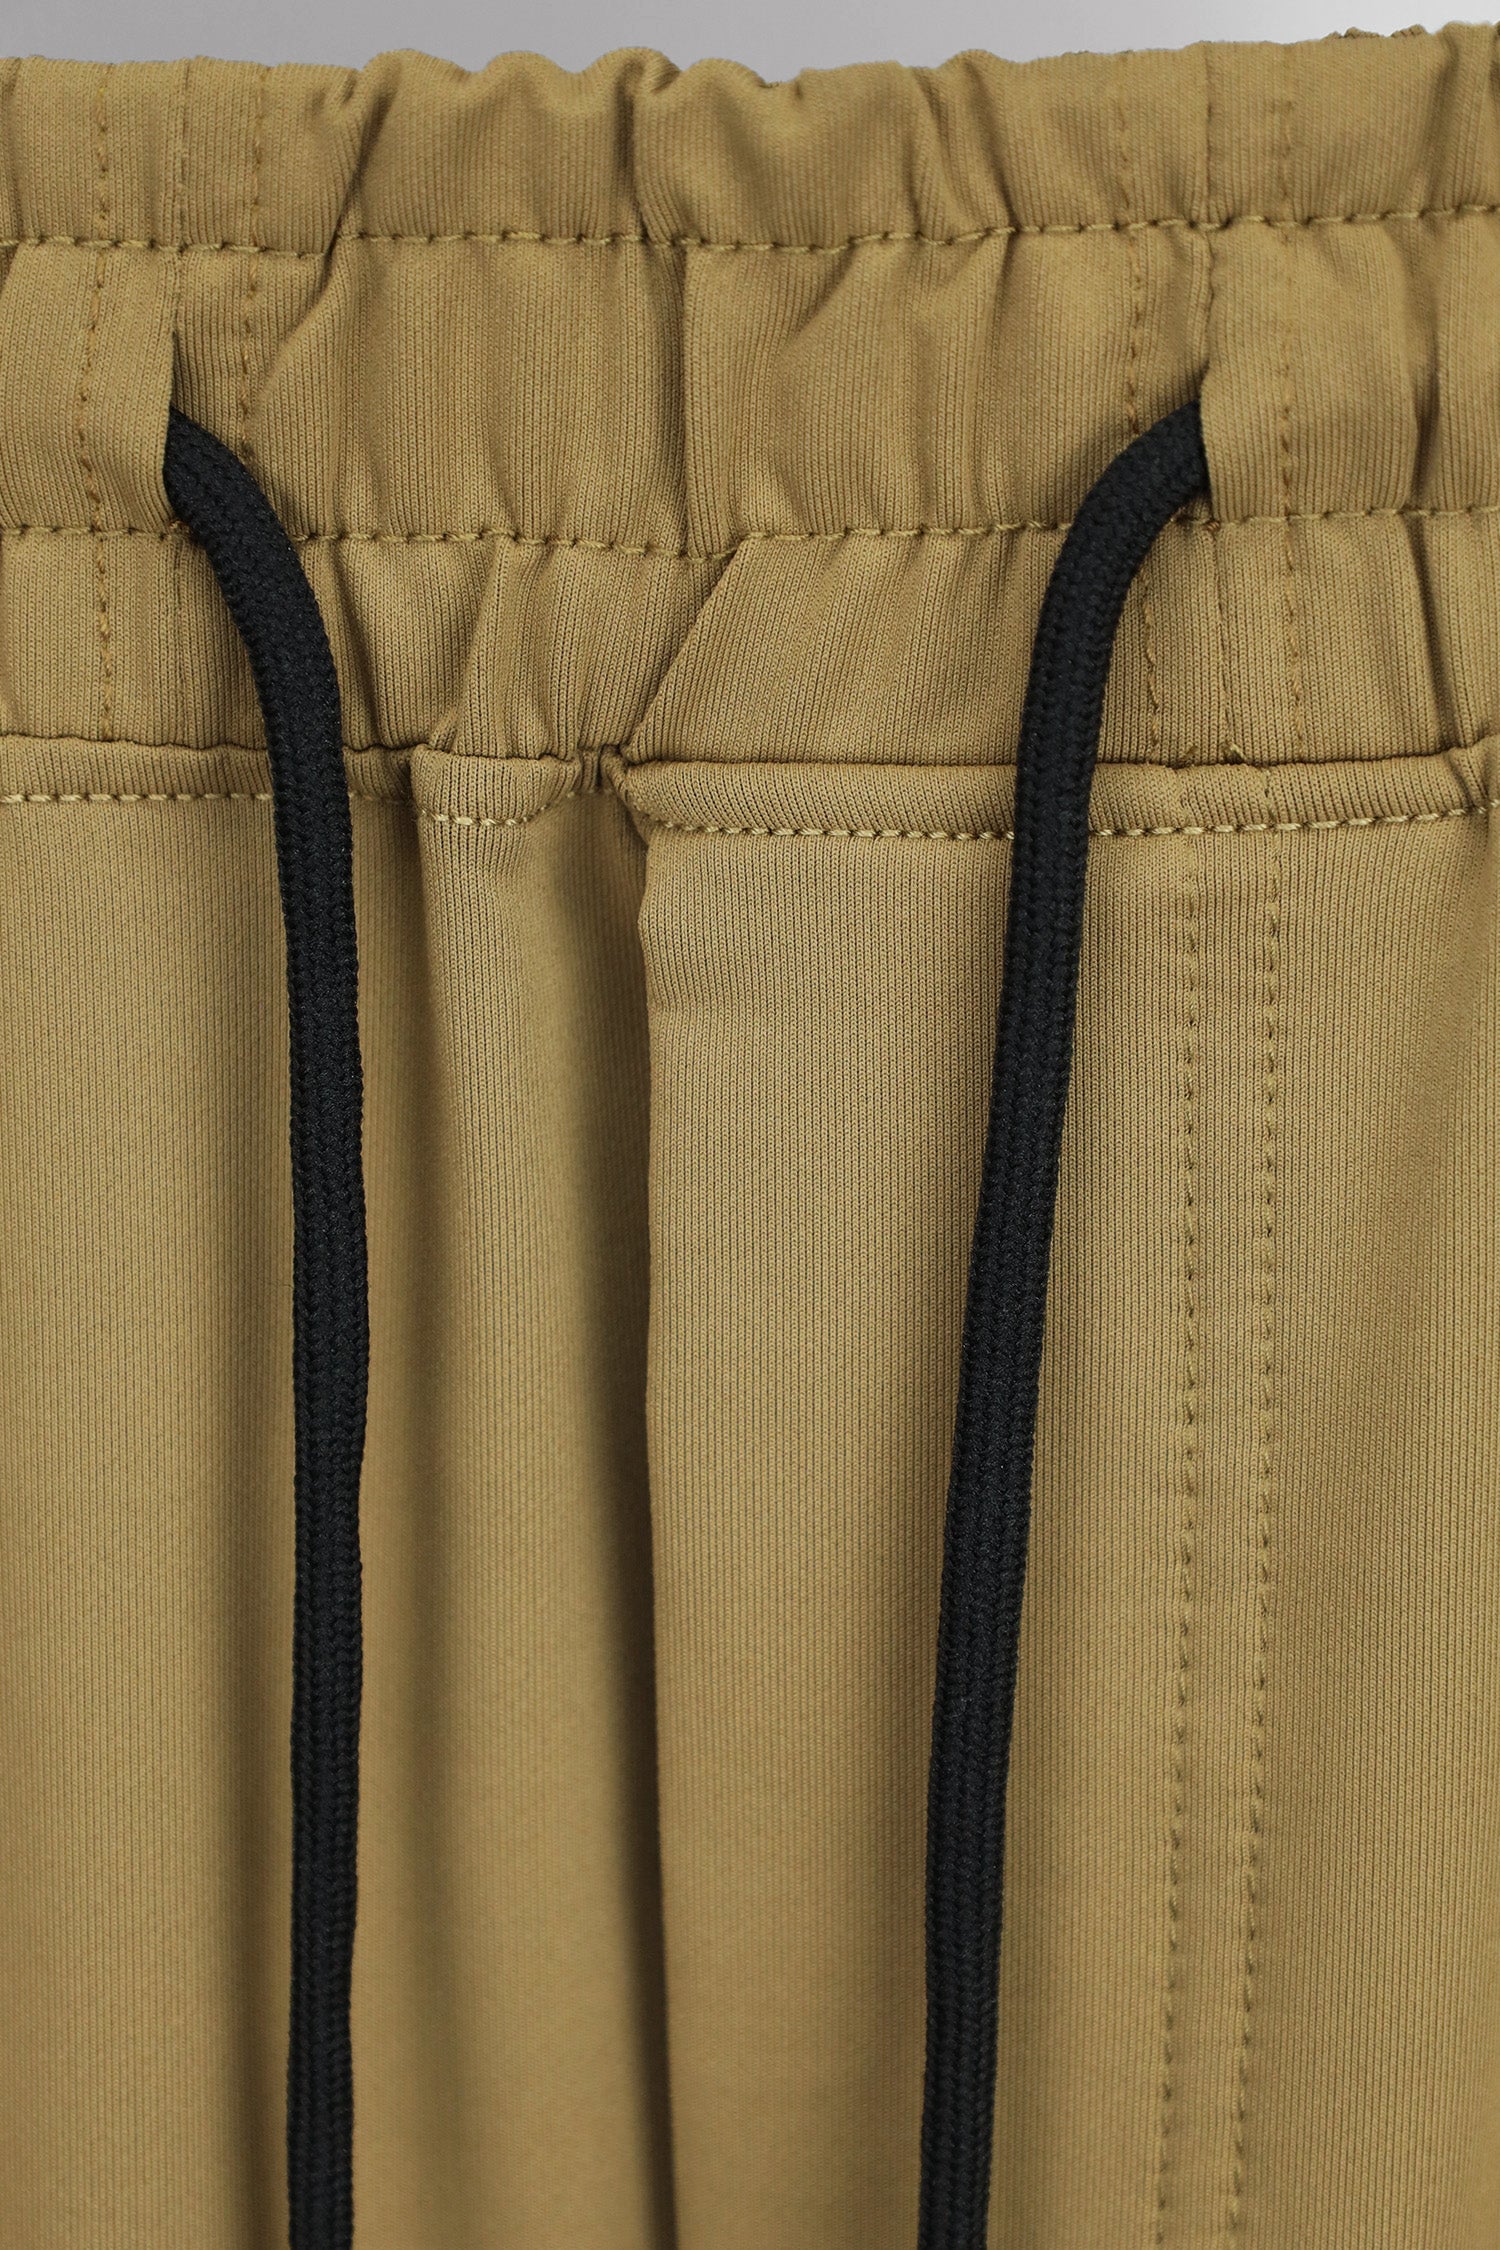 Turbo Reflector Logo Quick-dry Shorts